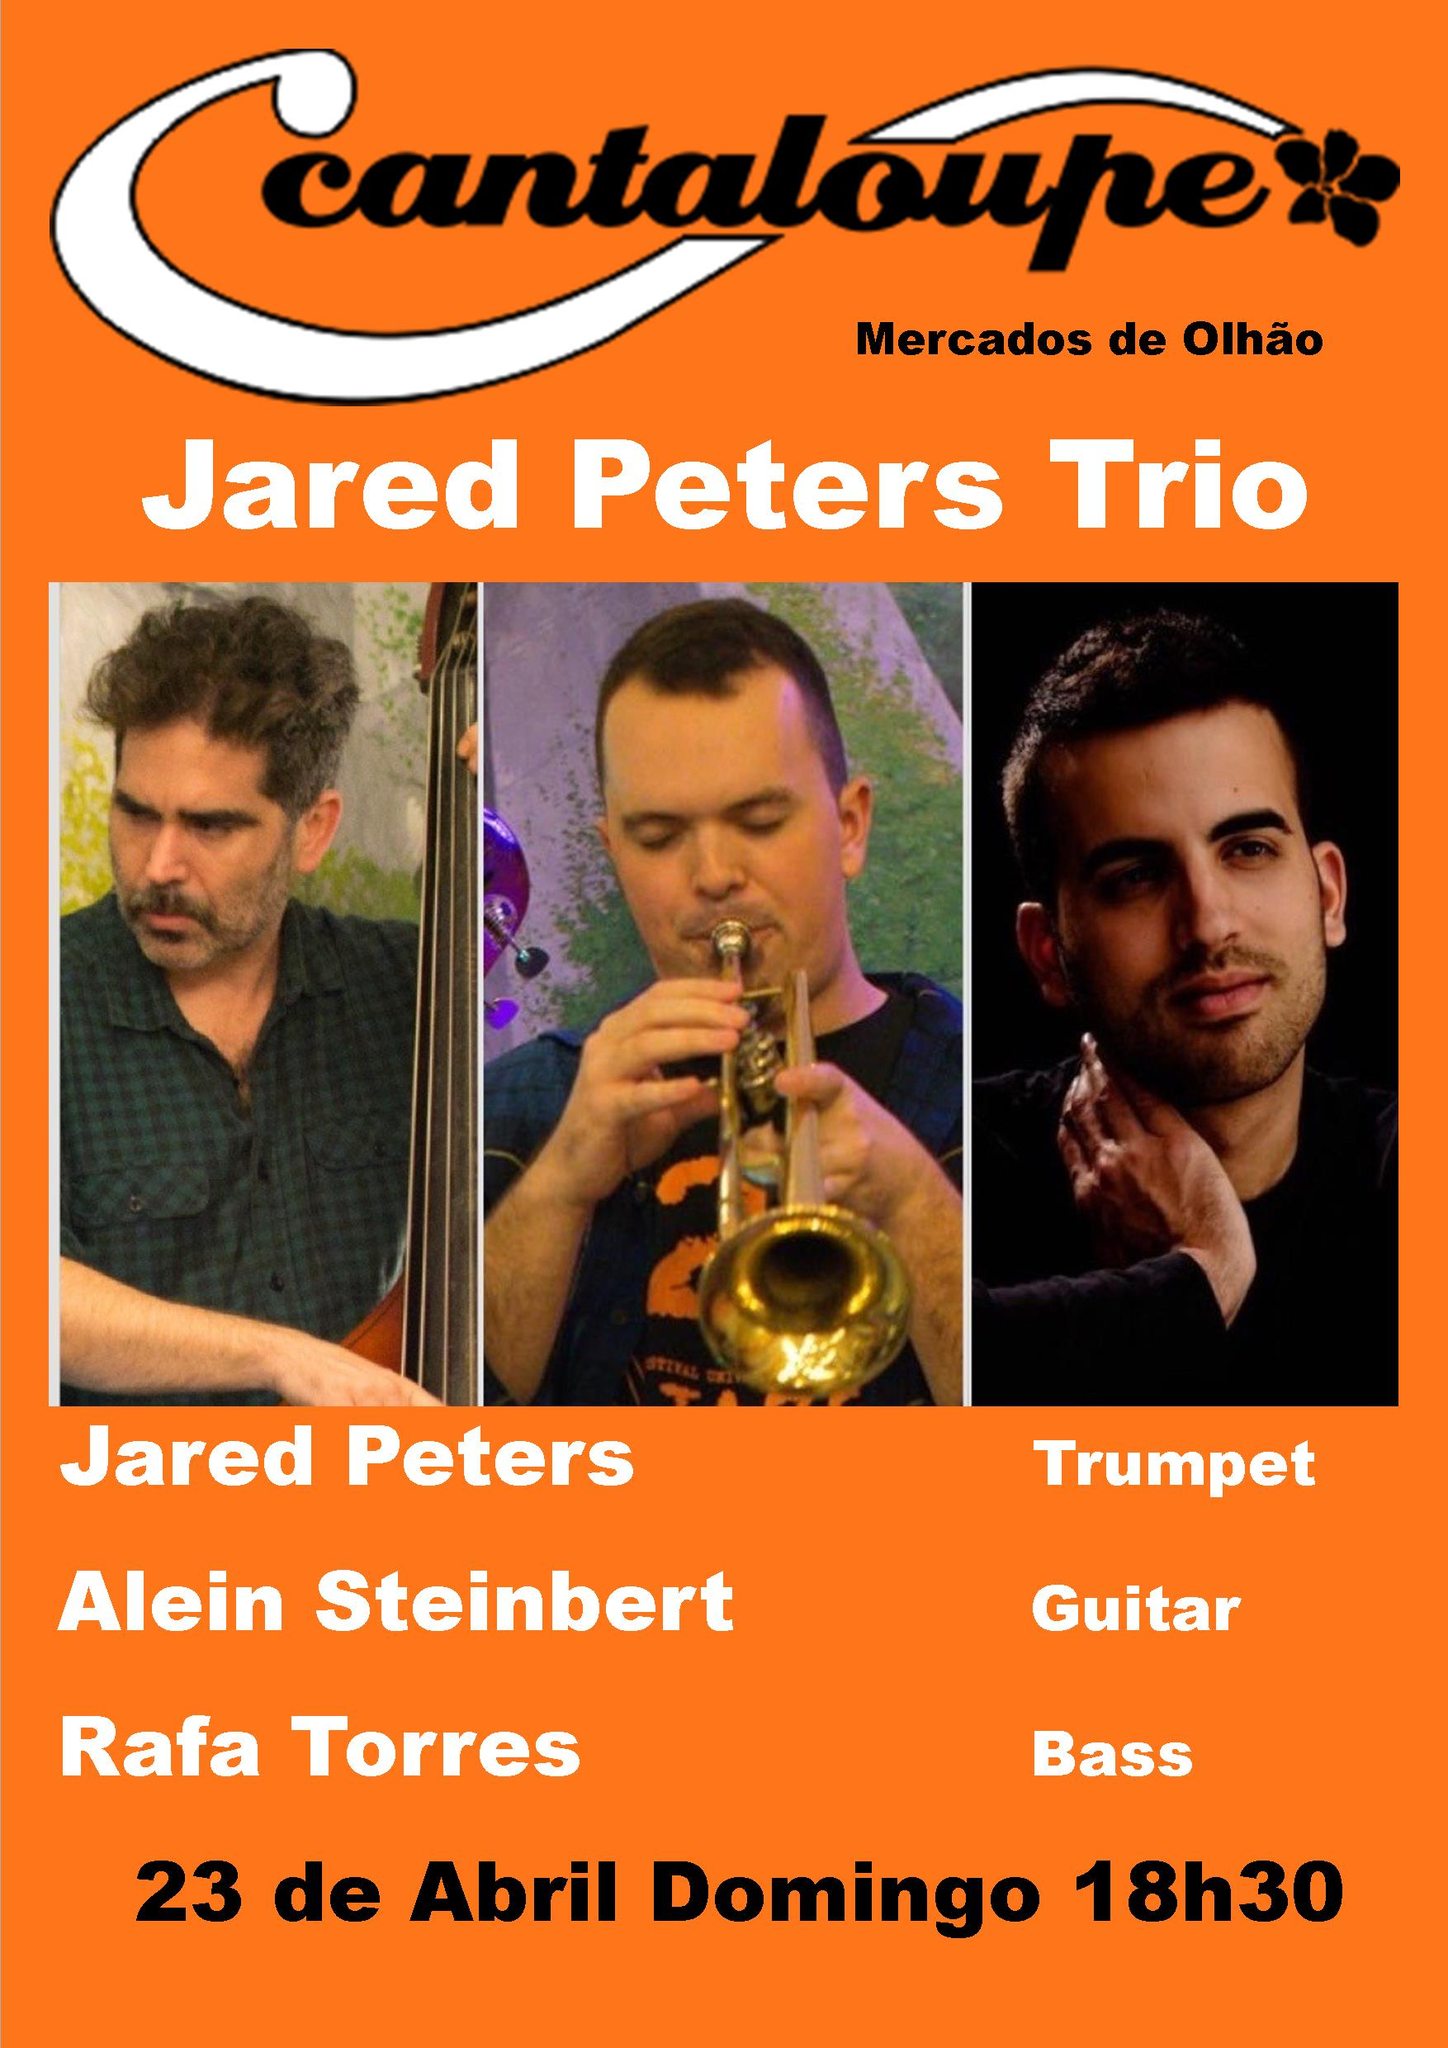 Jared Peters Trio